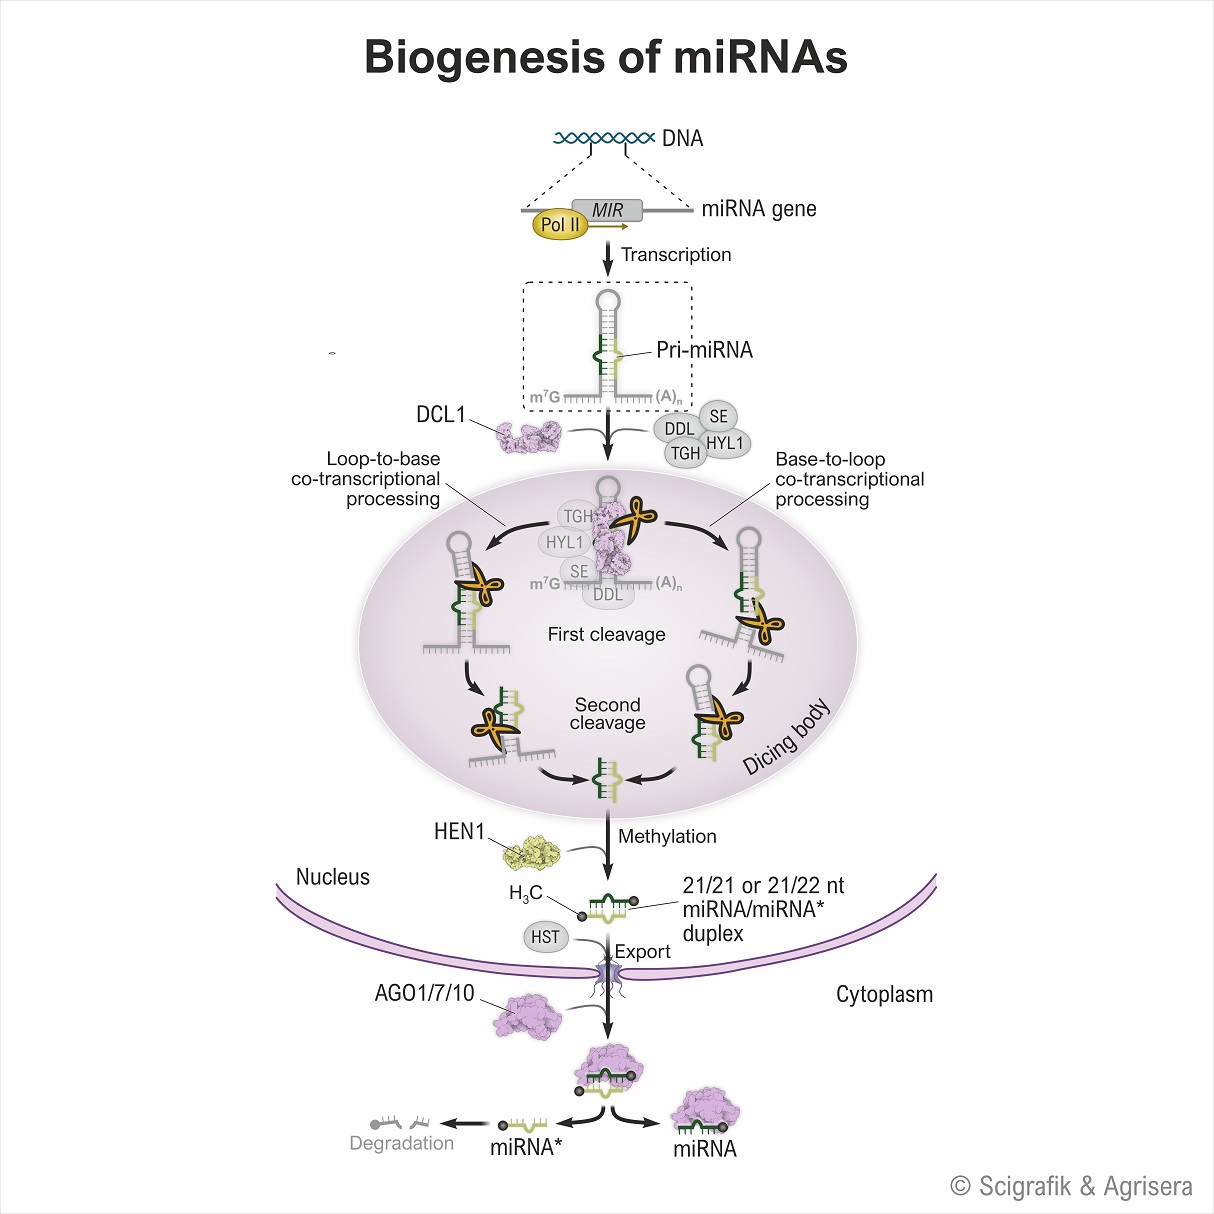 Biogenesis of miRNAs